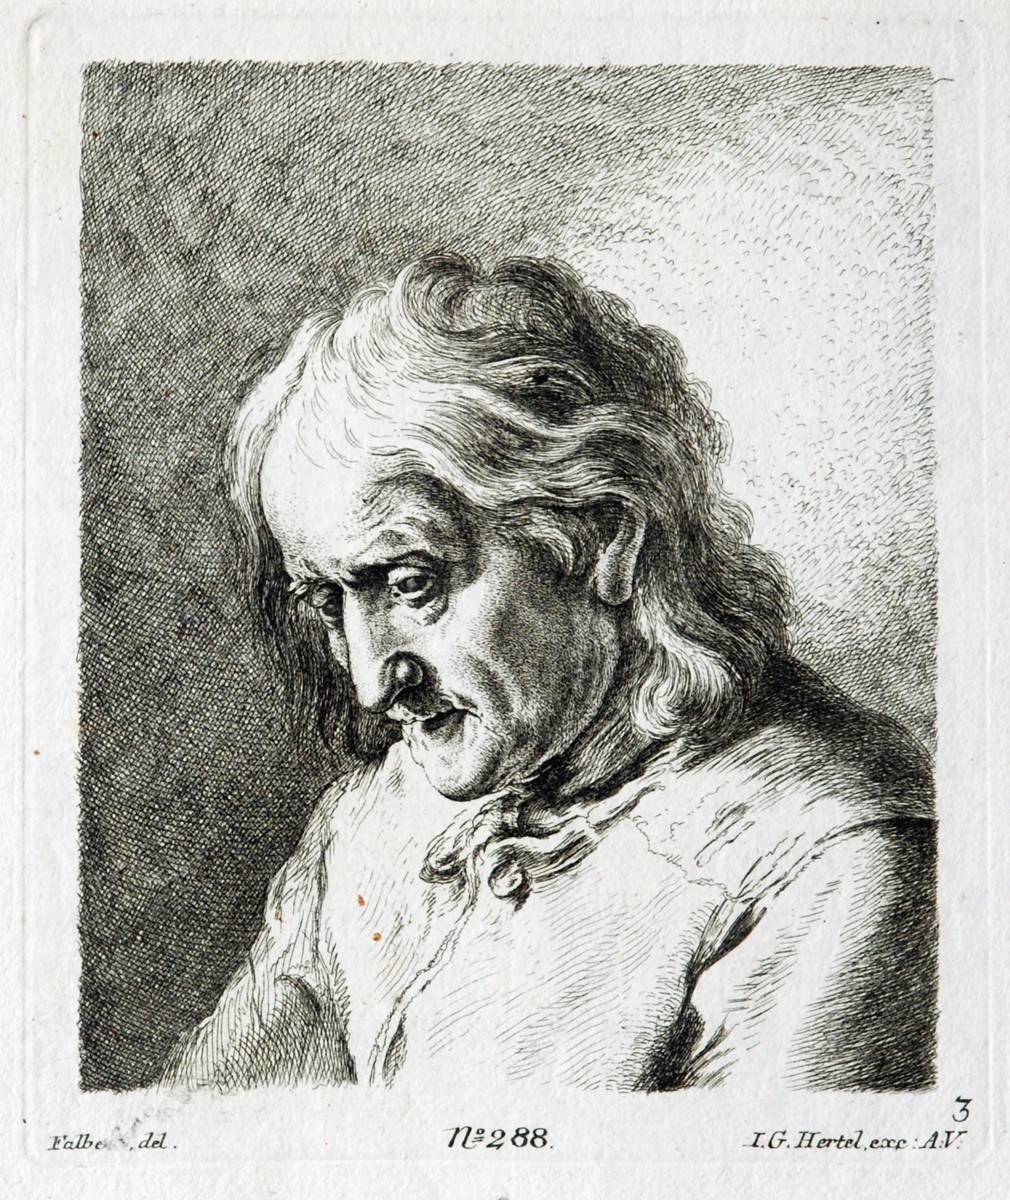 Johann Georg Hertel